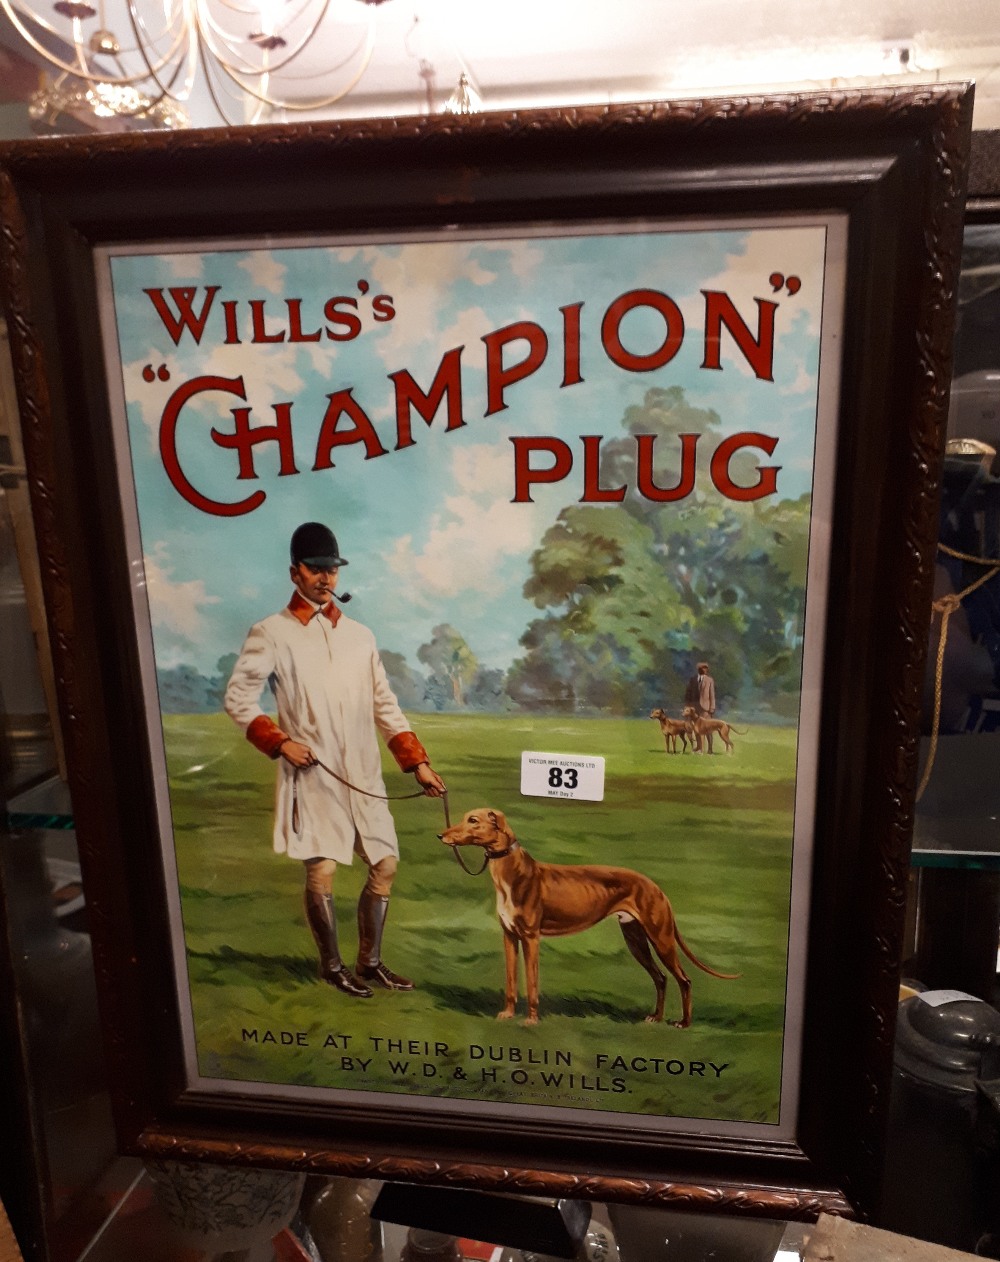 Framed Will's Champion Plug advertisement.